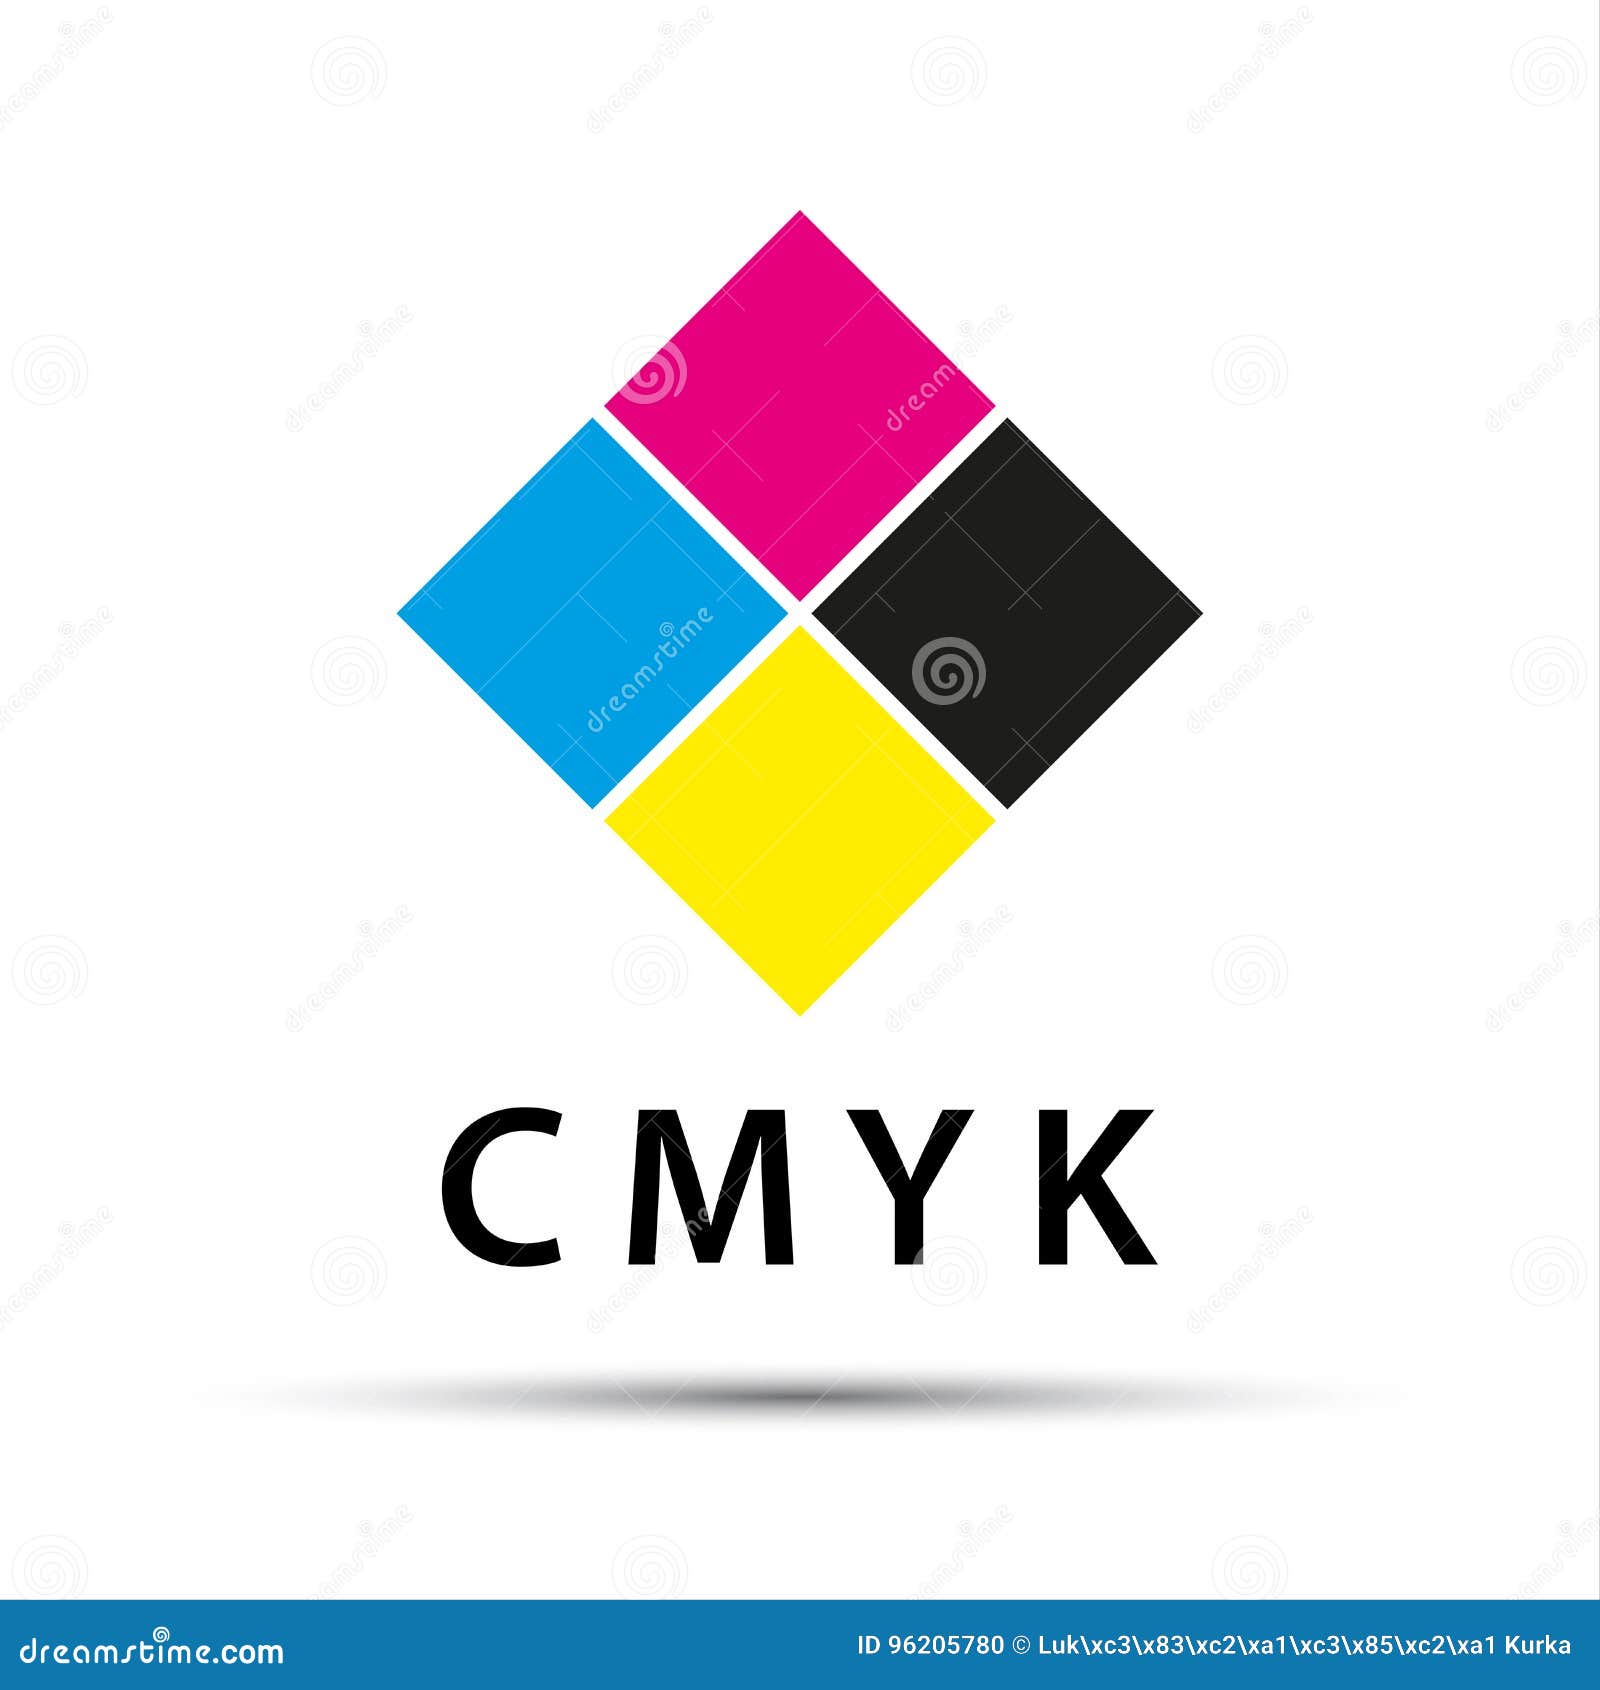 CMYK color print vector PNG - Similar PNG